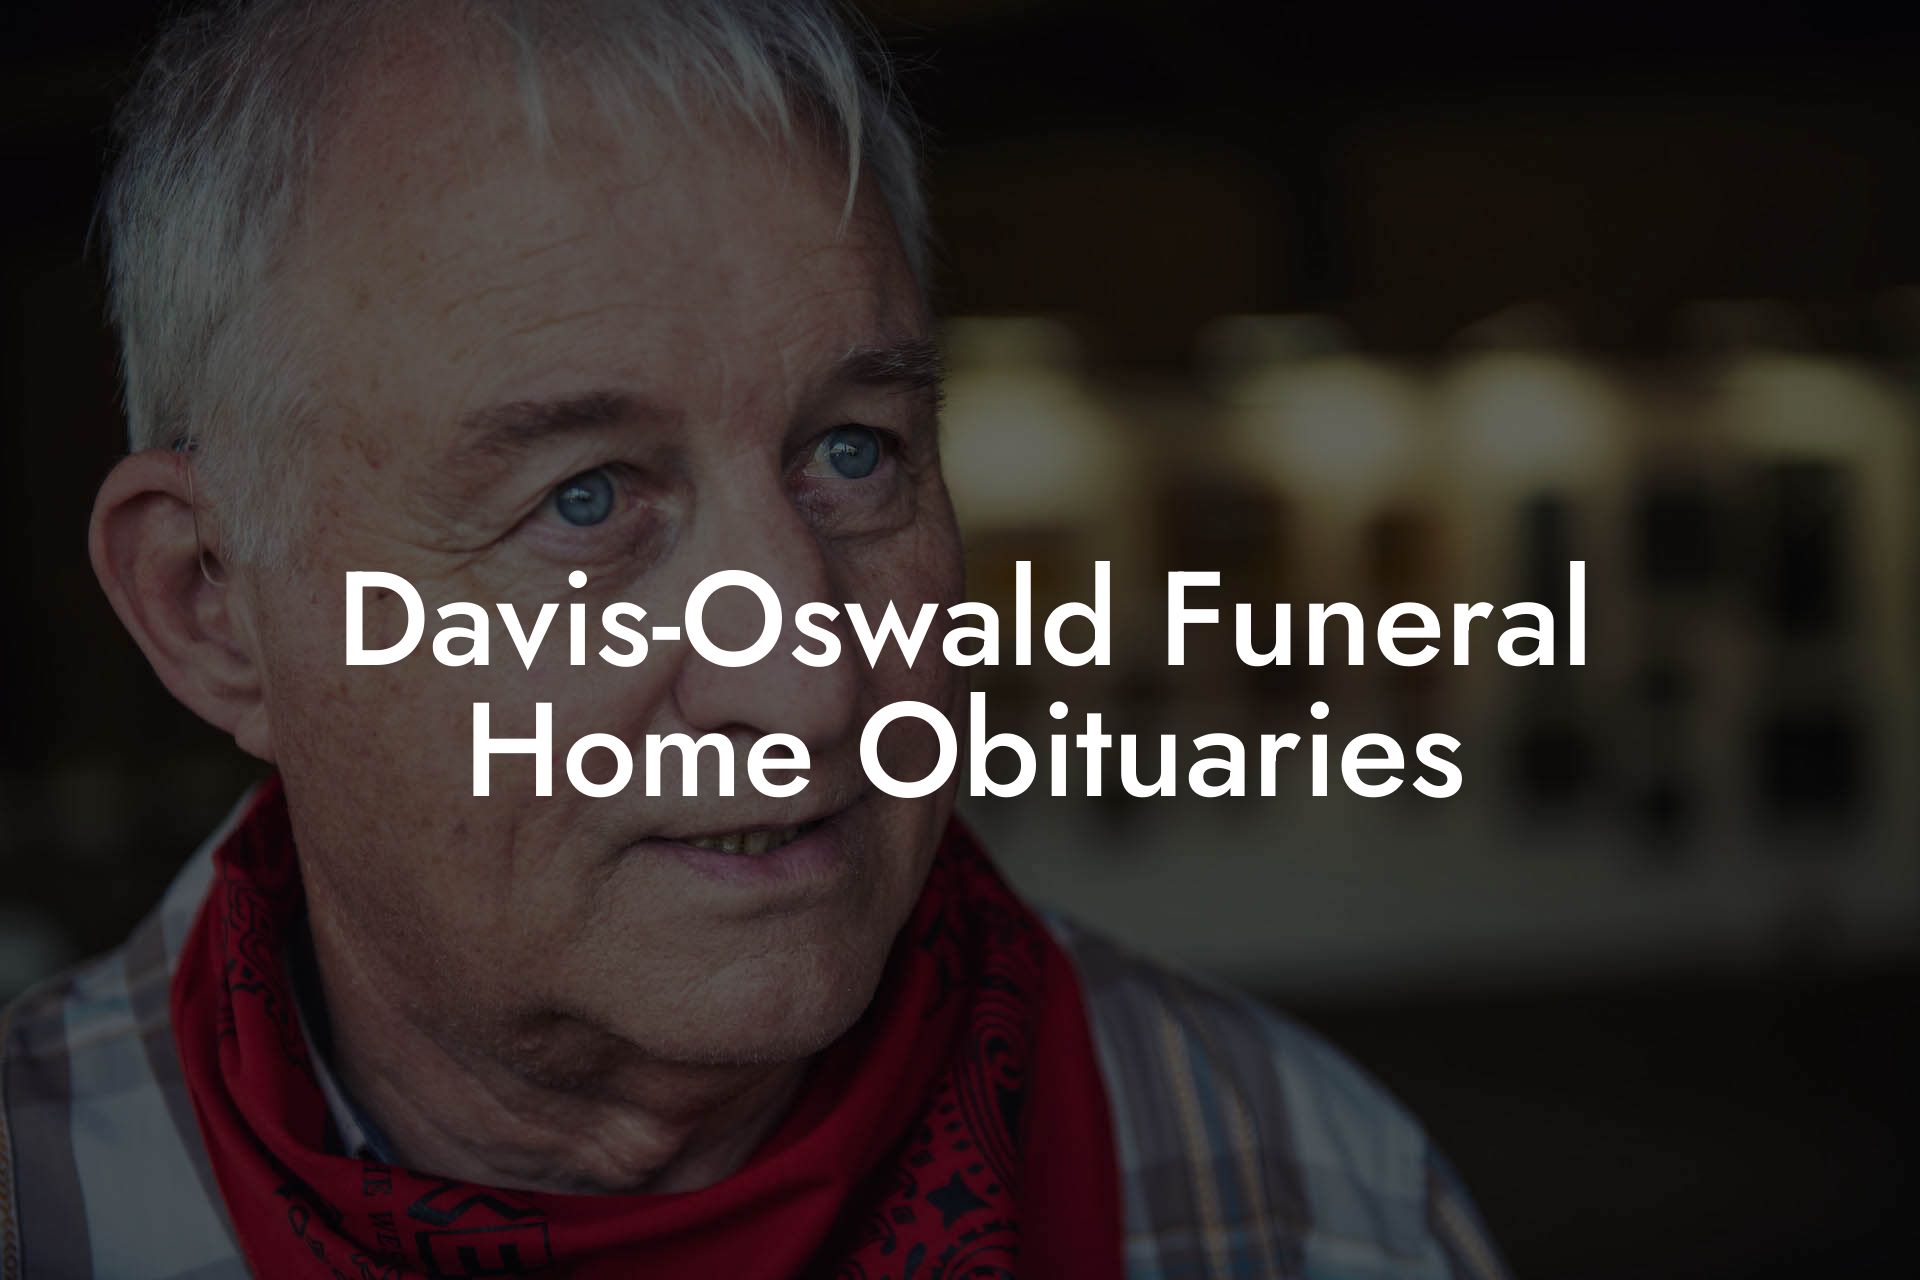 Davis-Oswald Funeral Home Obituaries